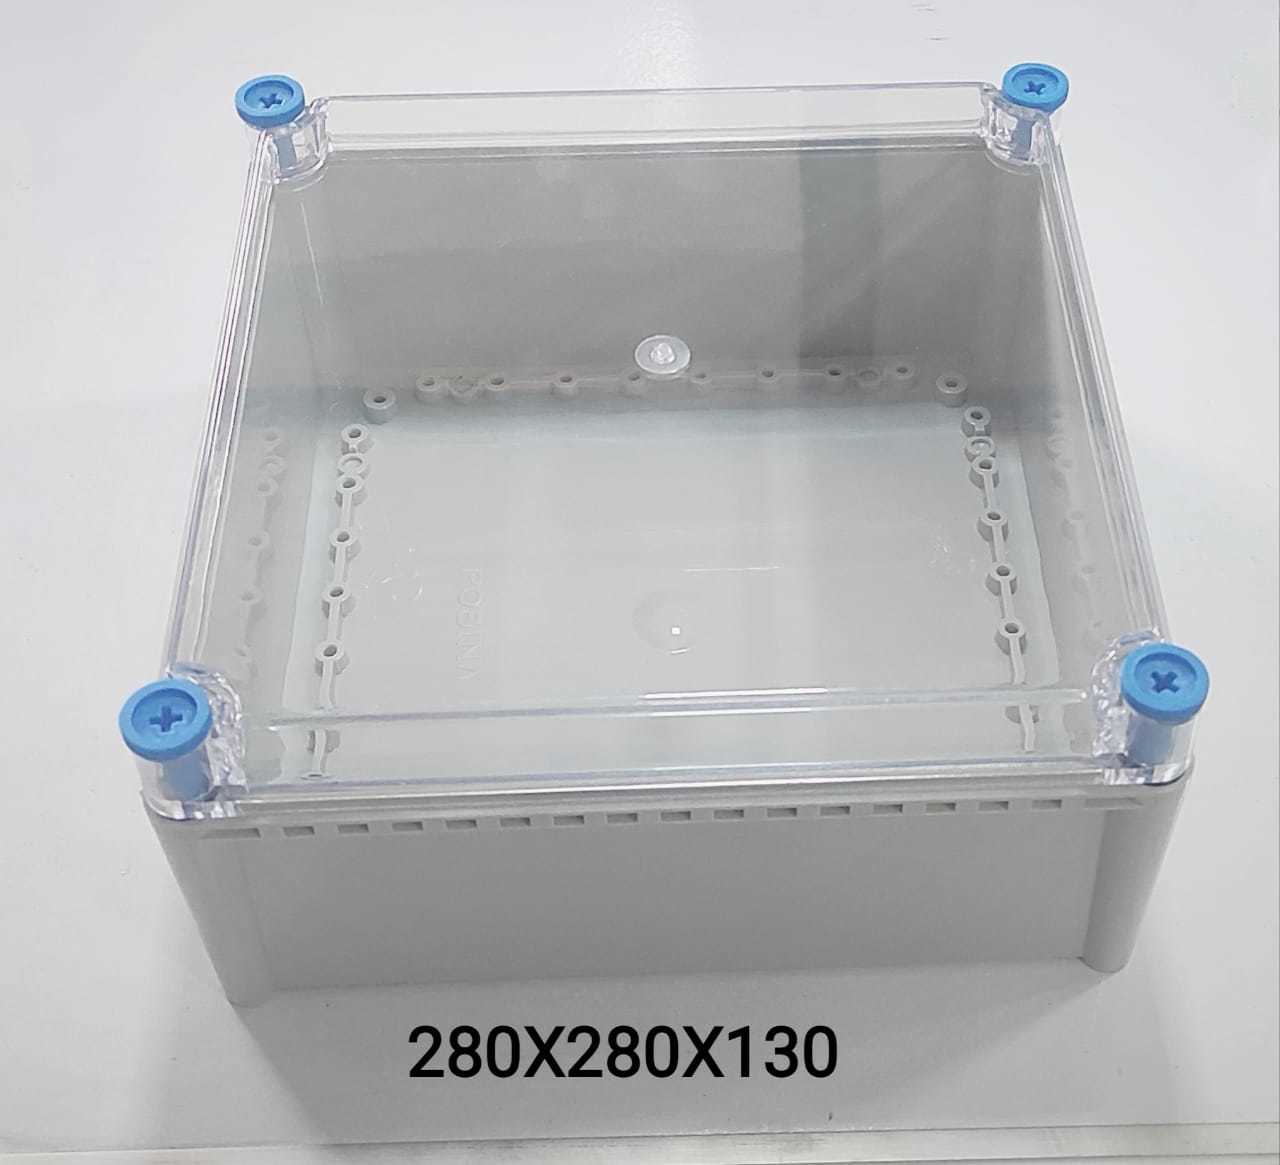 Pibox Solar/ Electrical Junction Box